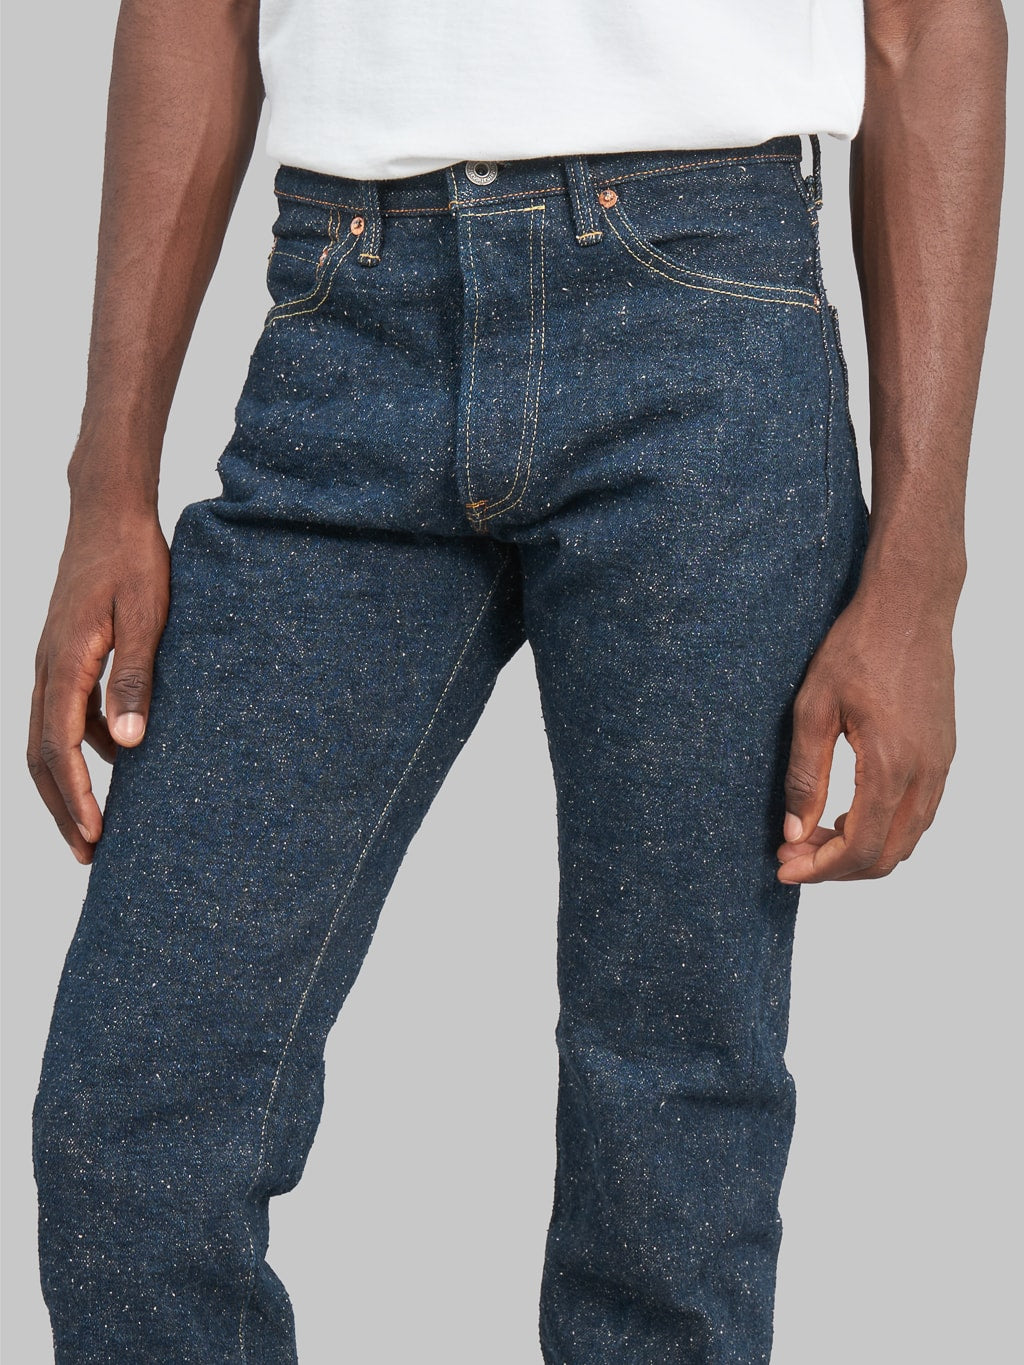 ONI Denim 246SESR Secret Super Rough Neat Straight selvedge Jeans mid rise